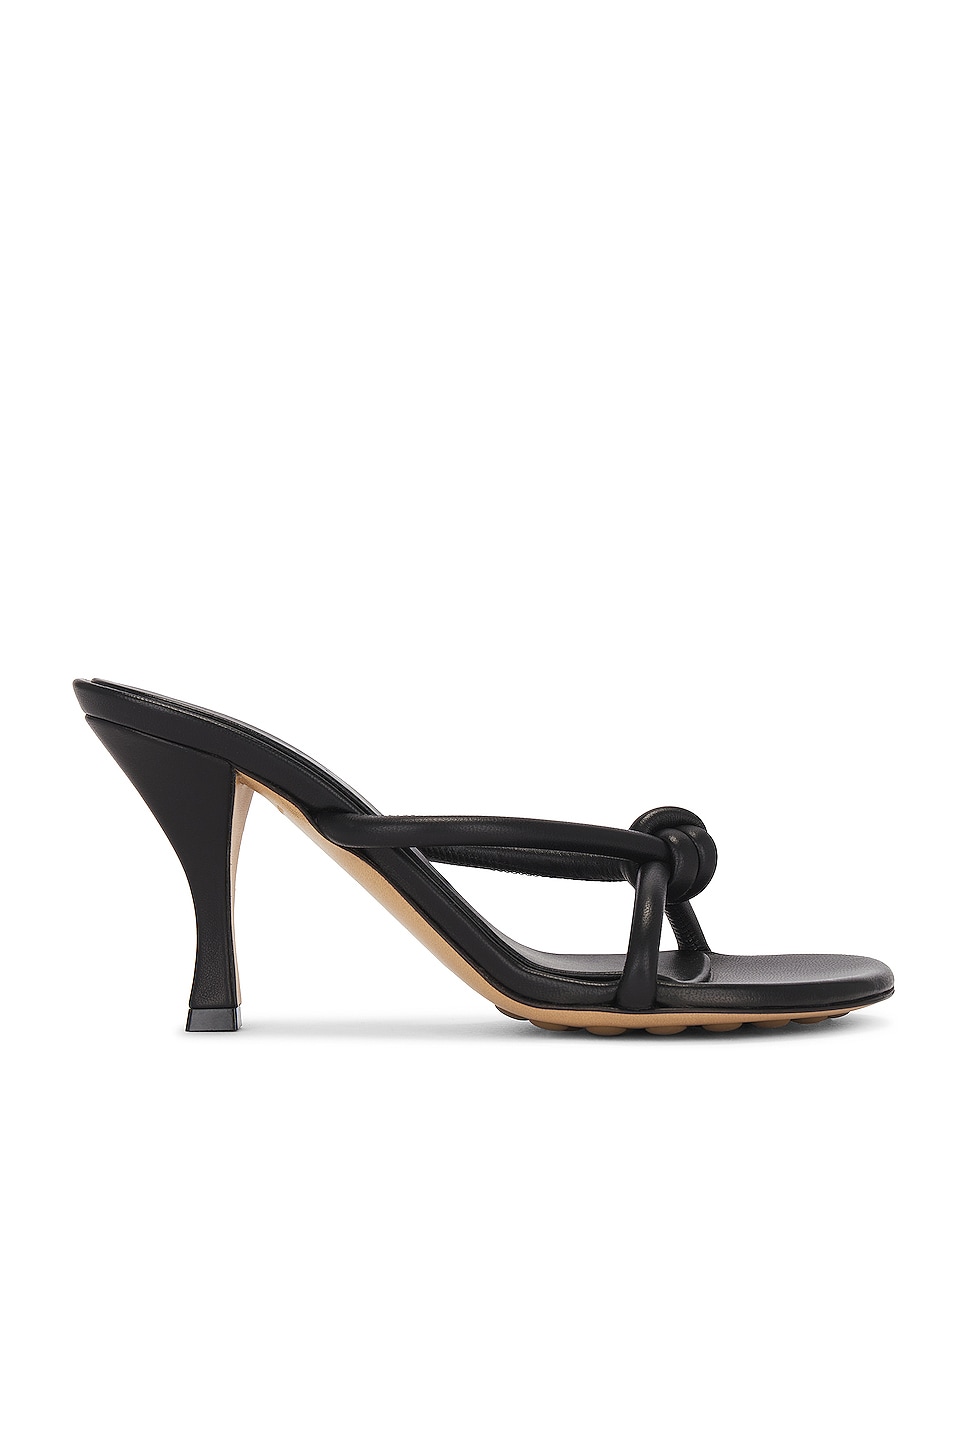 Bottega Veneta Blink Mule Sandal in Black | FWRD